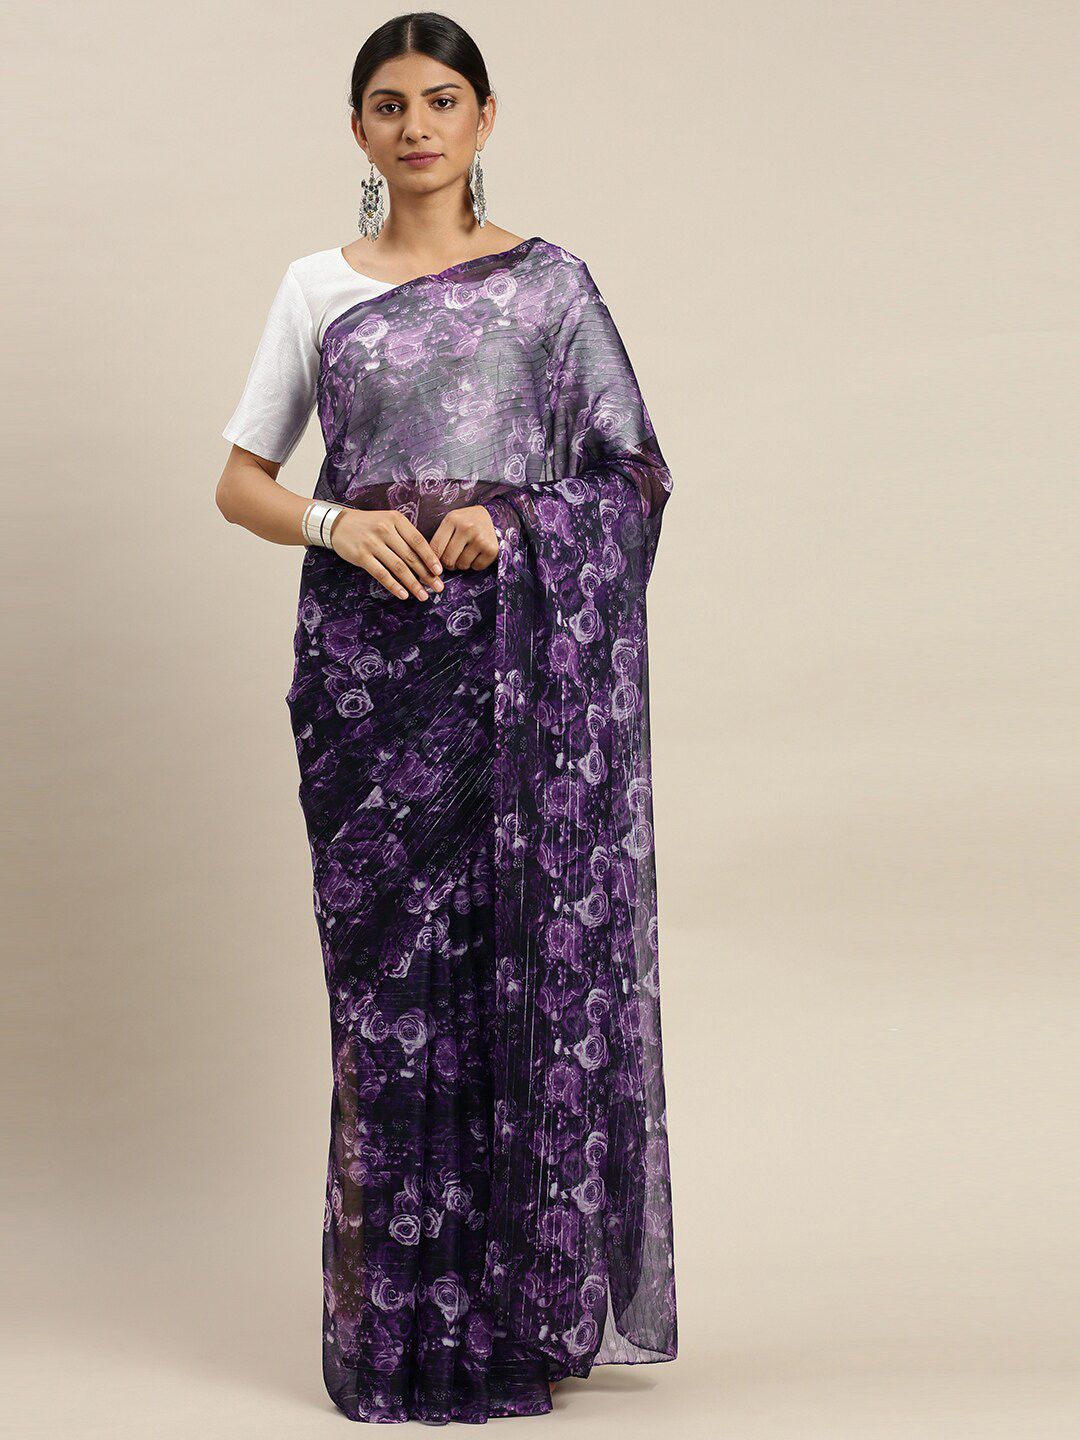 AVANSHEE Purple Floral Zari Saree Price in India